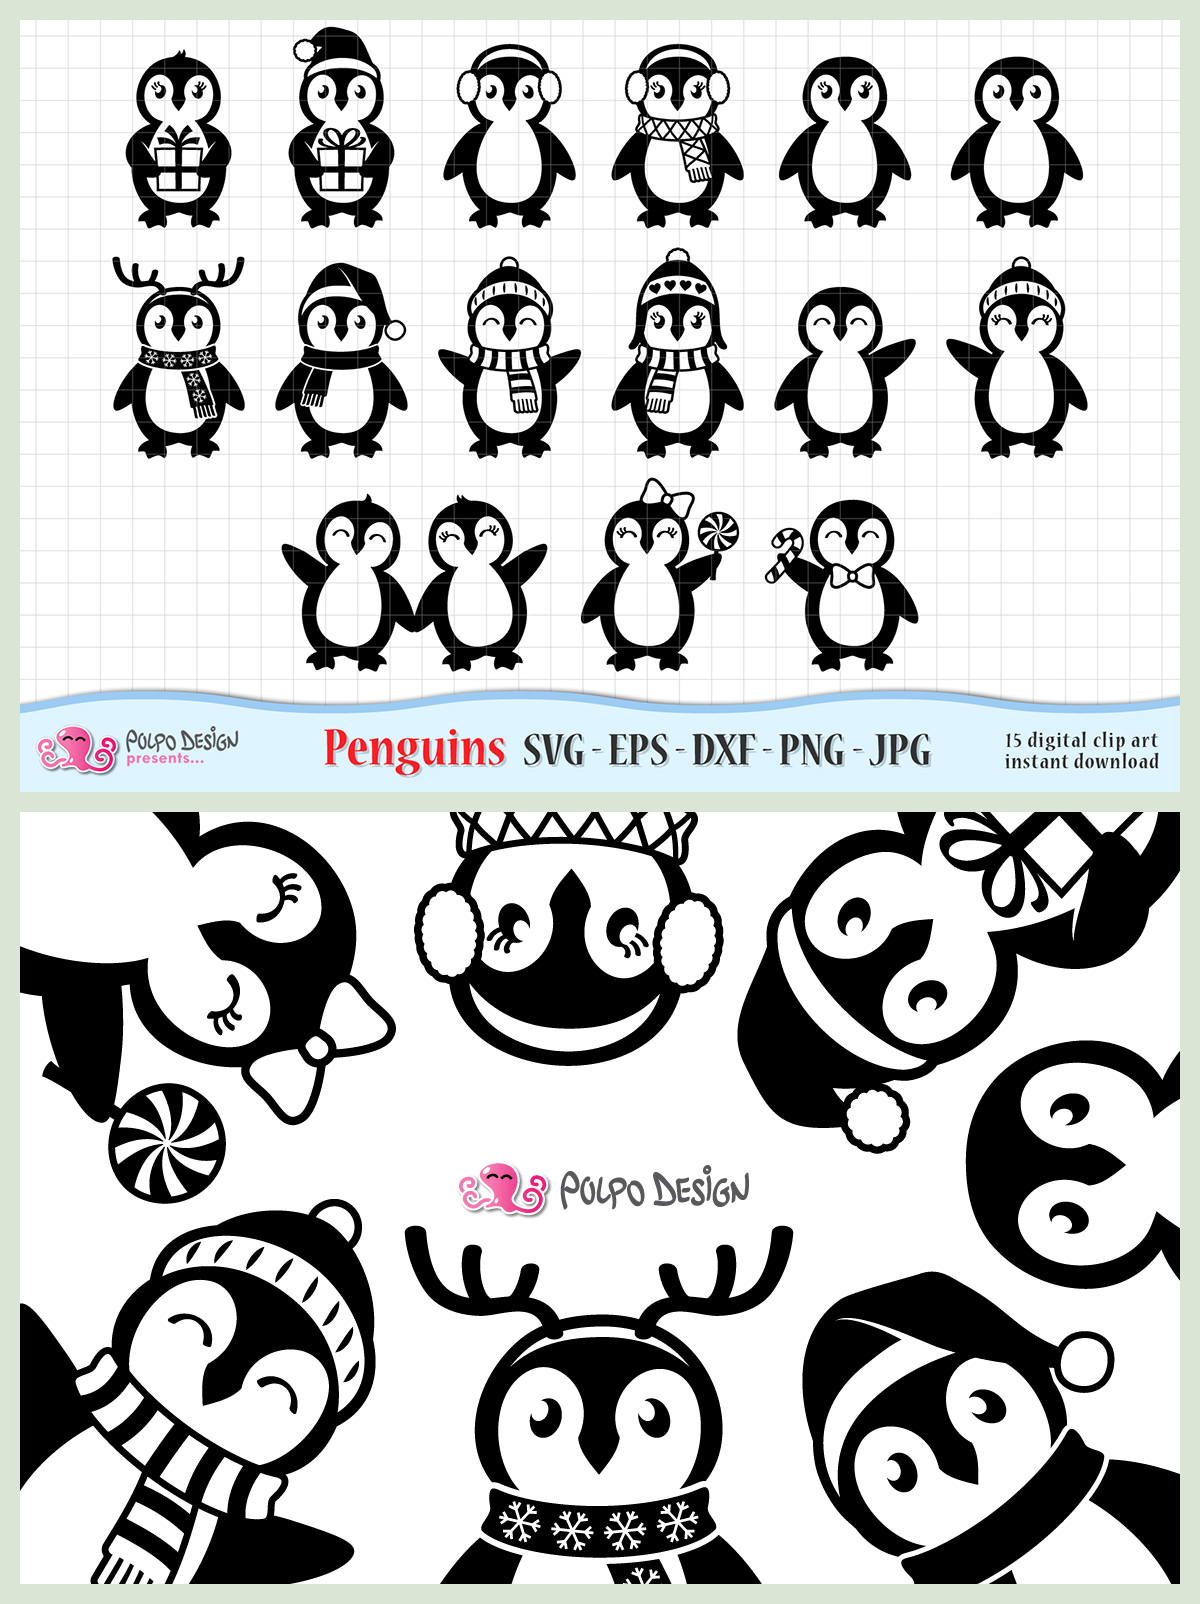 Download Cricut Downloads Silhouette Designs Cute Penguin Svg Penguin Svg Girl And Boy Penguins Baby Penguin Svg Penguin Cut File Print Clipart Kits How To Collage Jesuskidsng Org